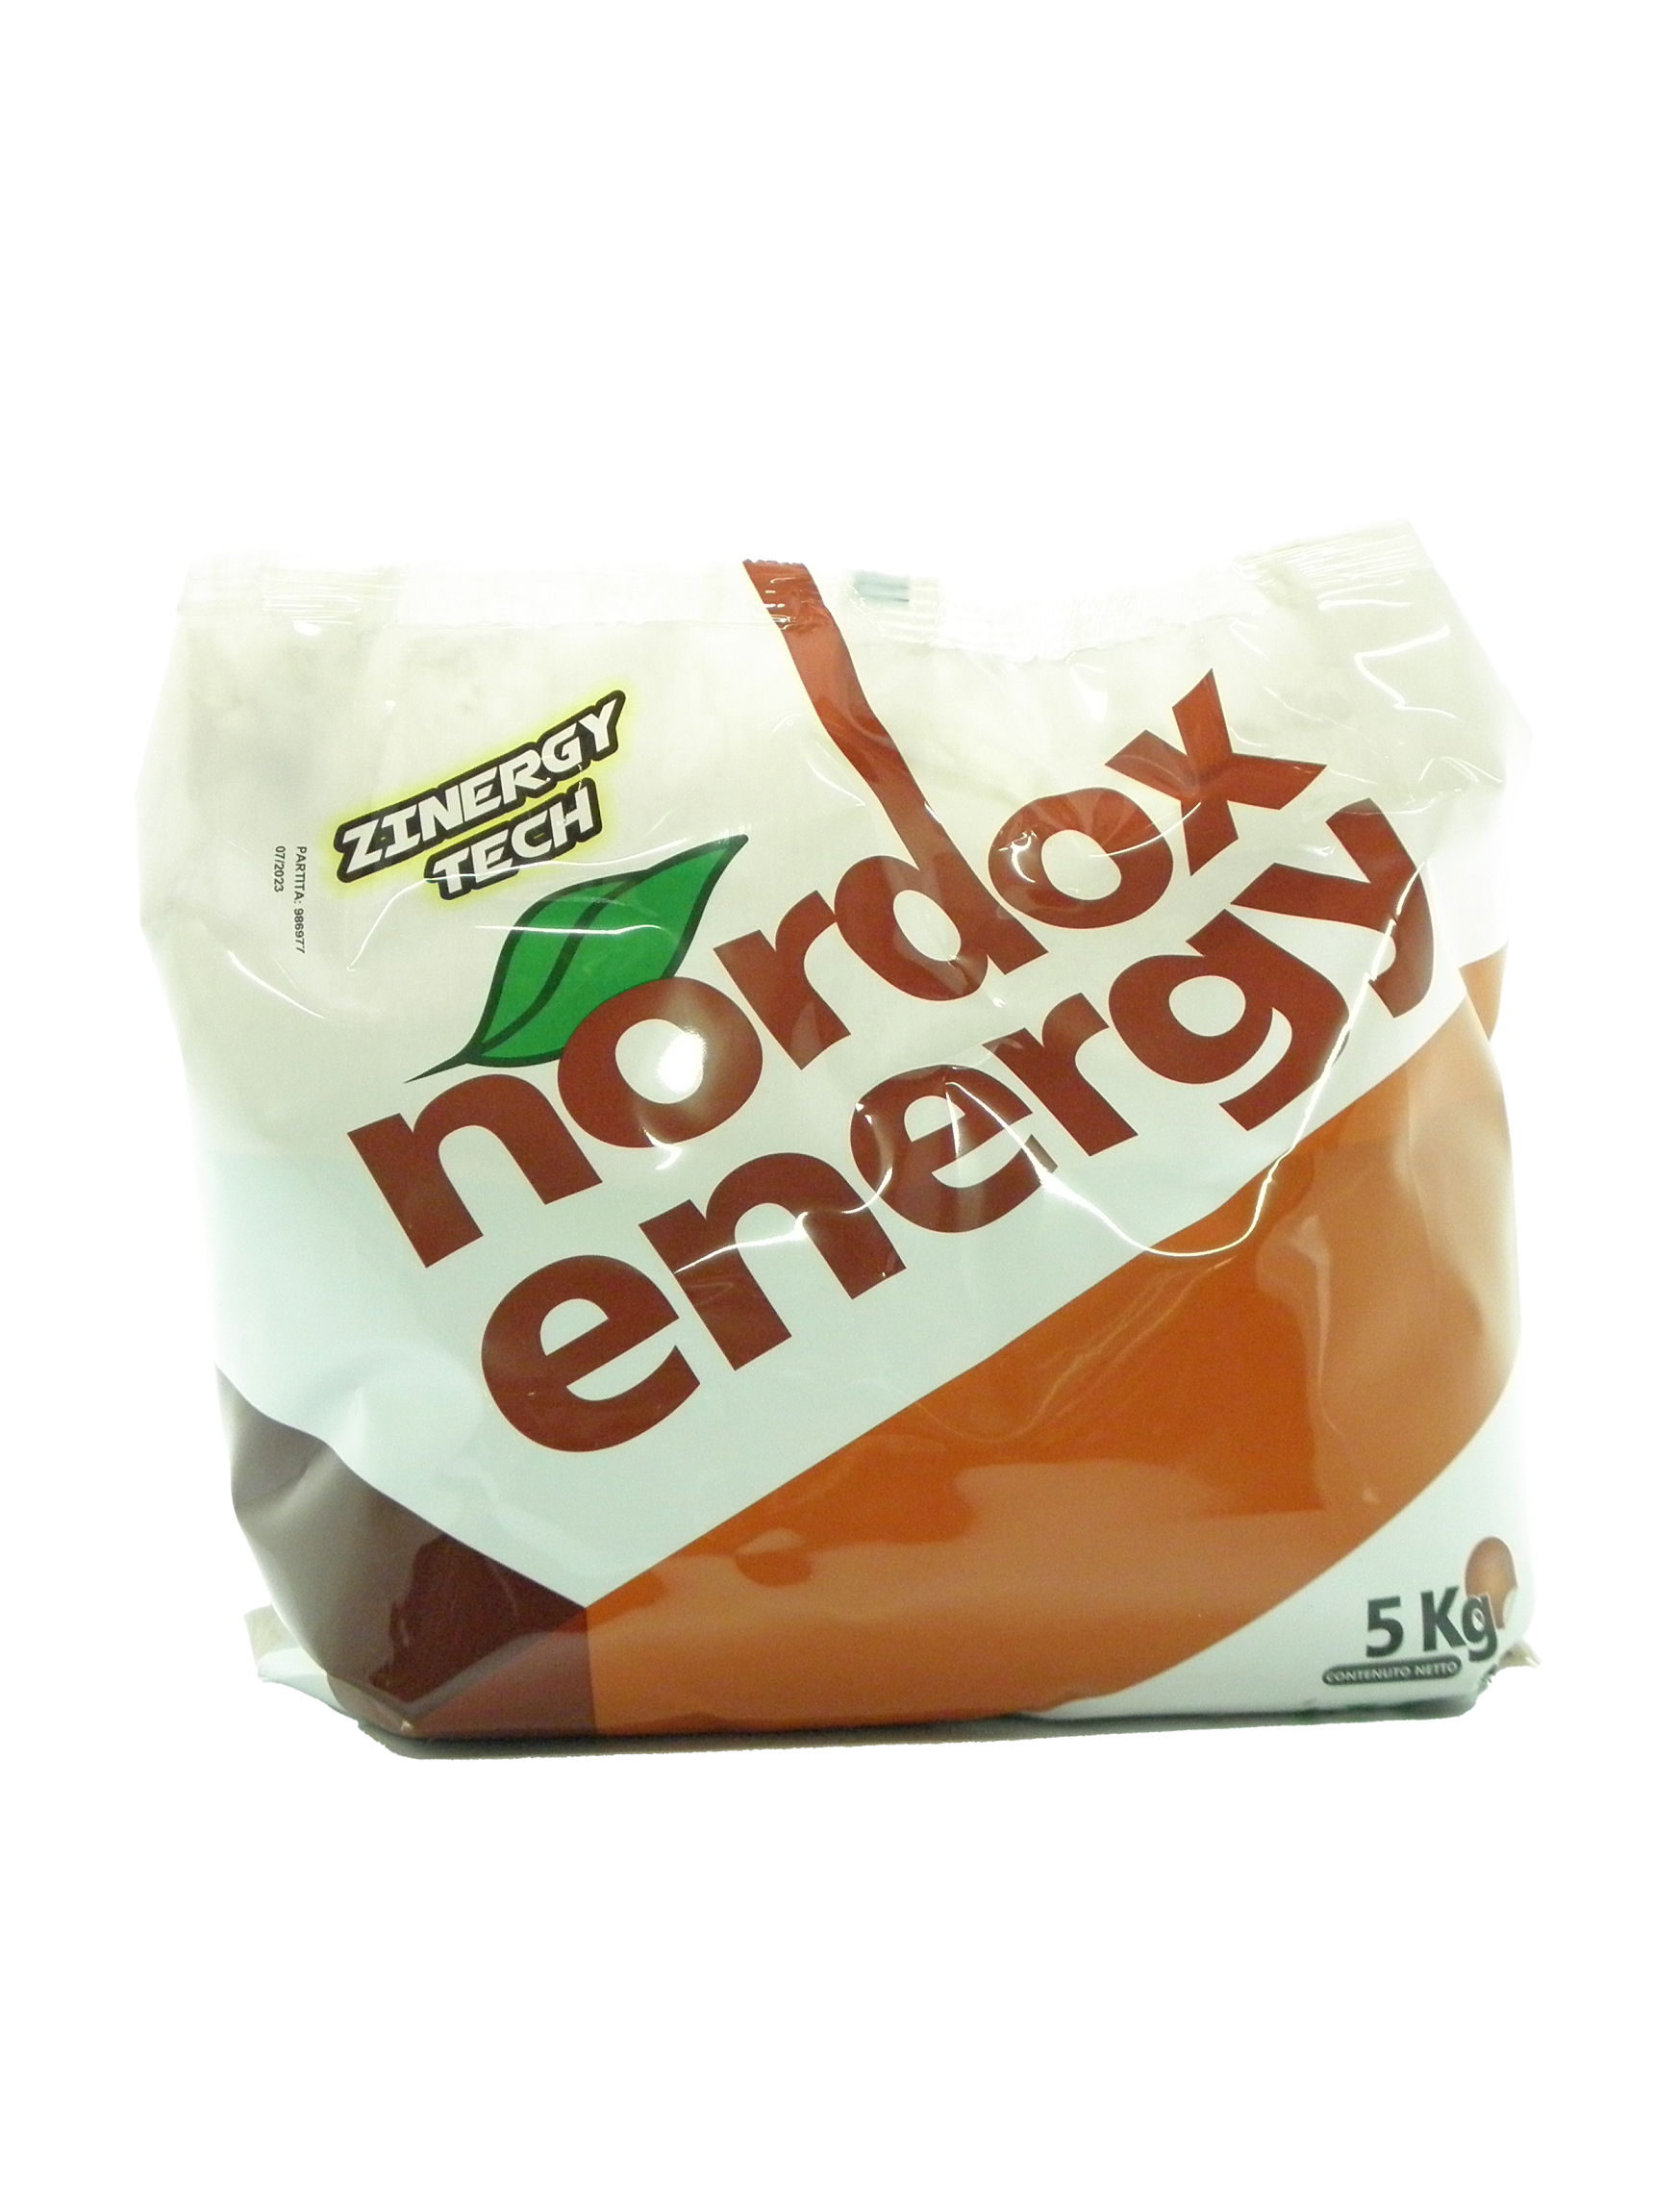 NORDOX ENERGY da Kg. 5